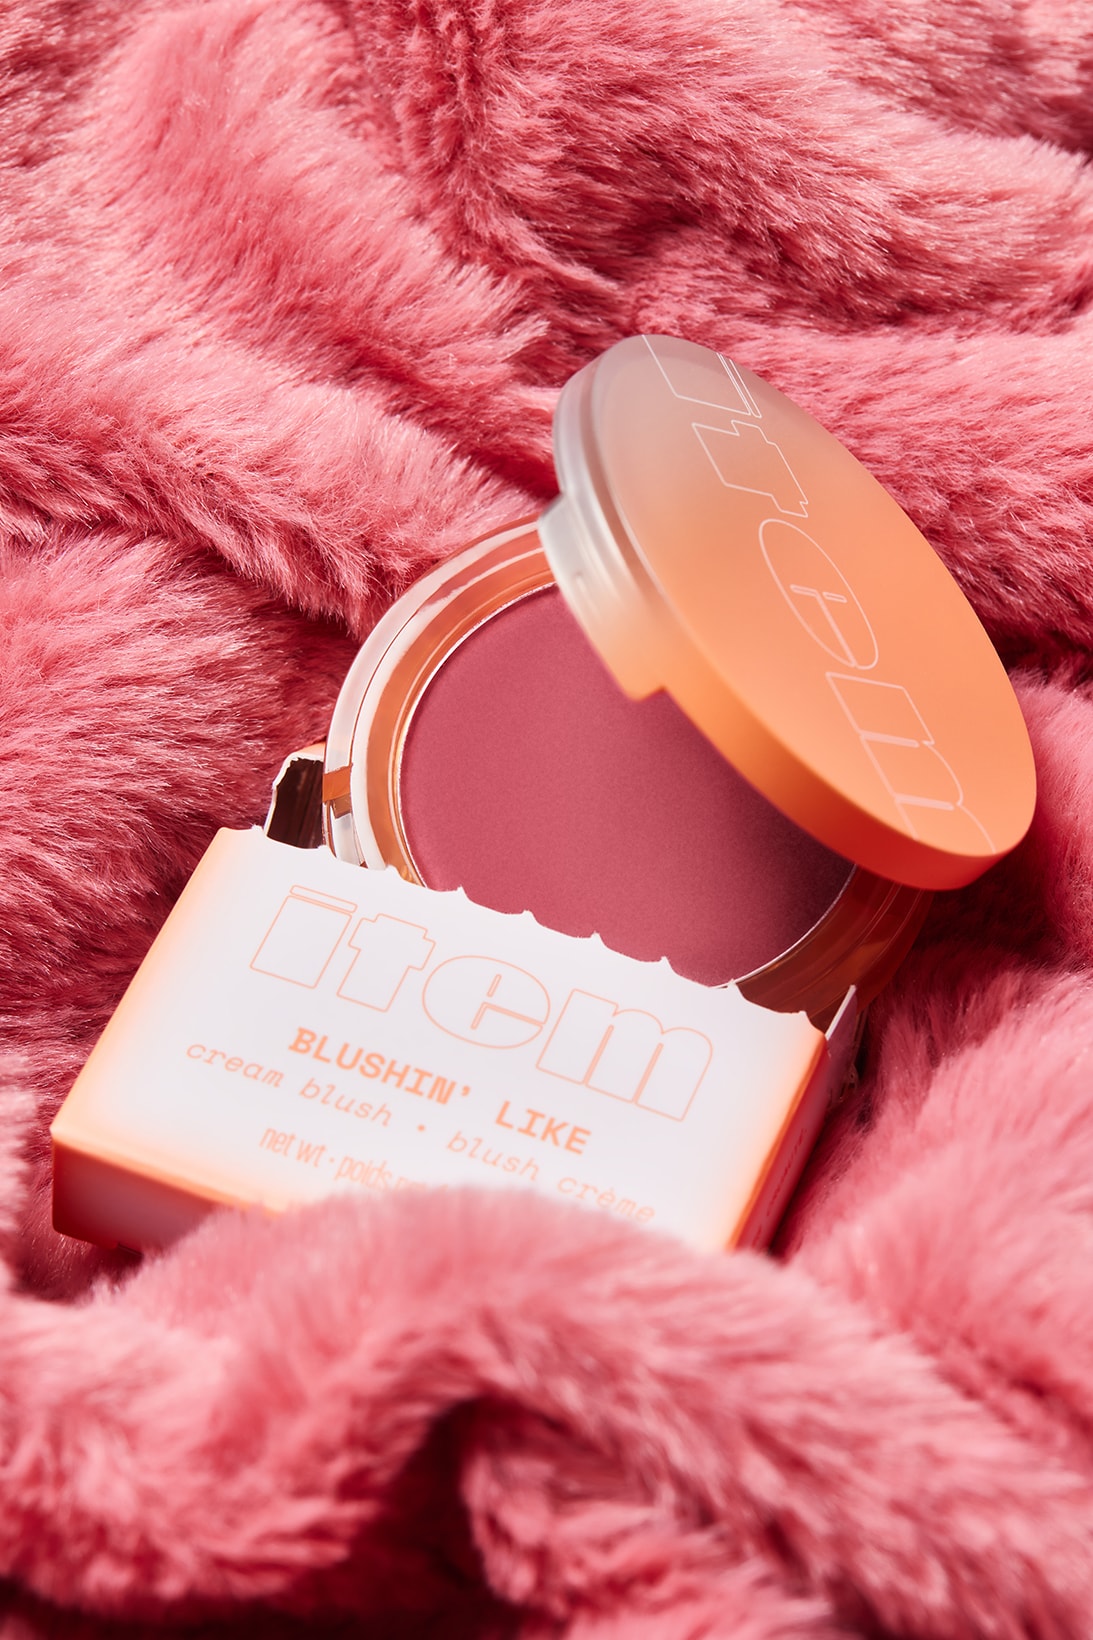 ITEM Beauty Blushin' Like Blushes Admit It Oopsies Bad Bleep Addison Rae Packaging Details